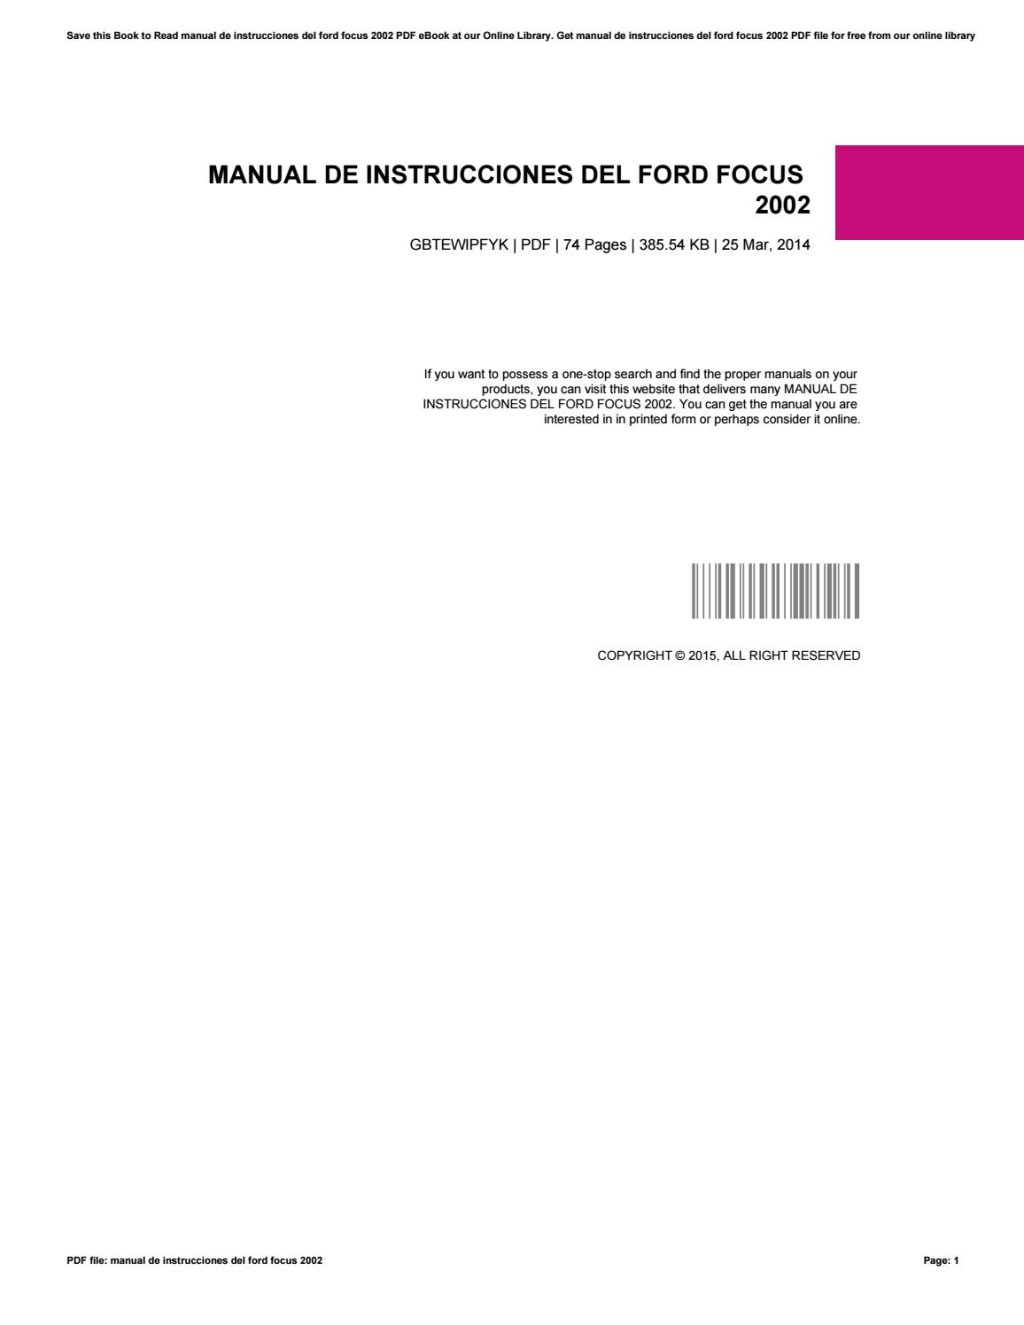 Picture of: Manual de instrucciones del ford focus  by